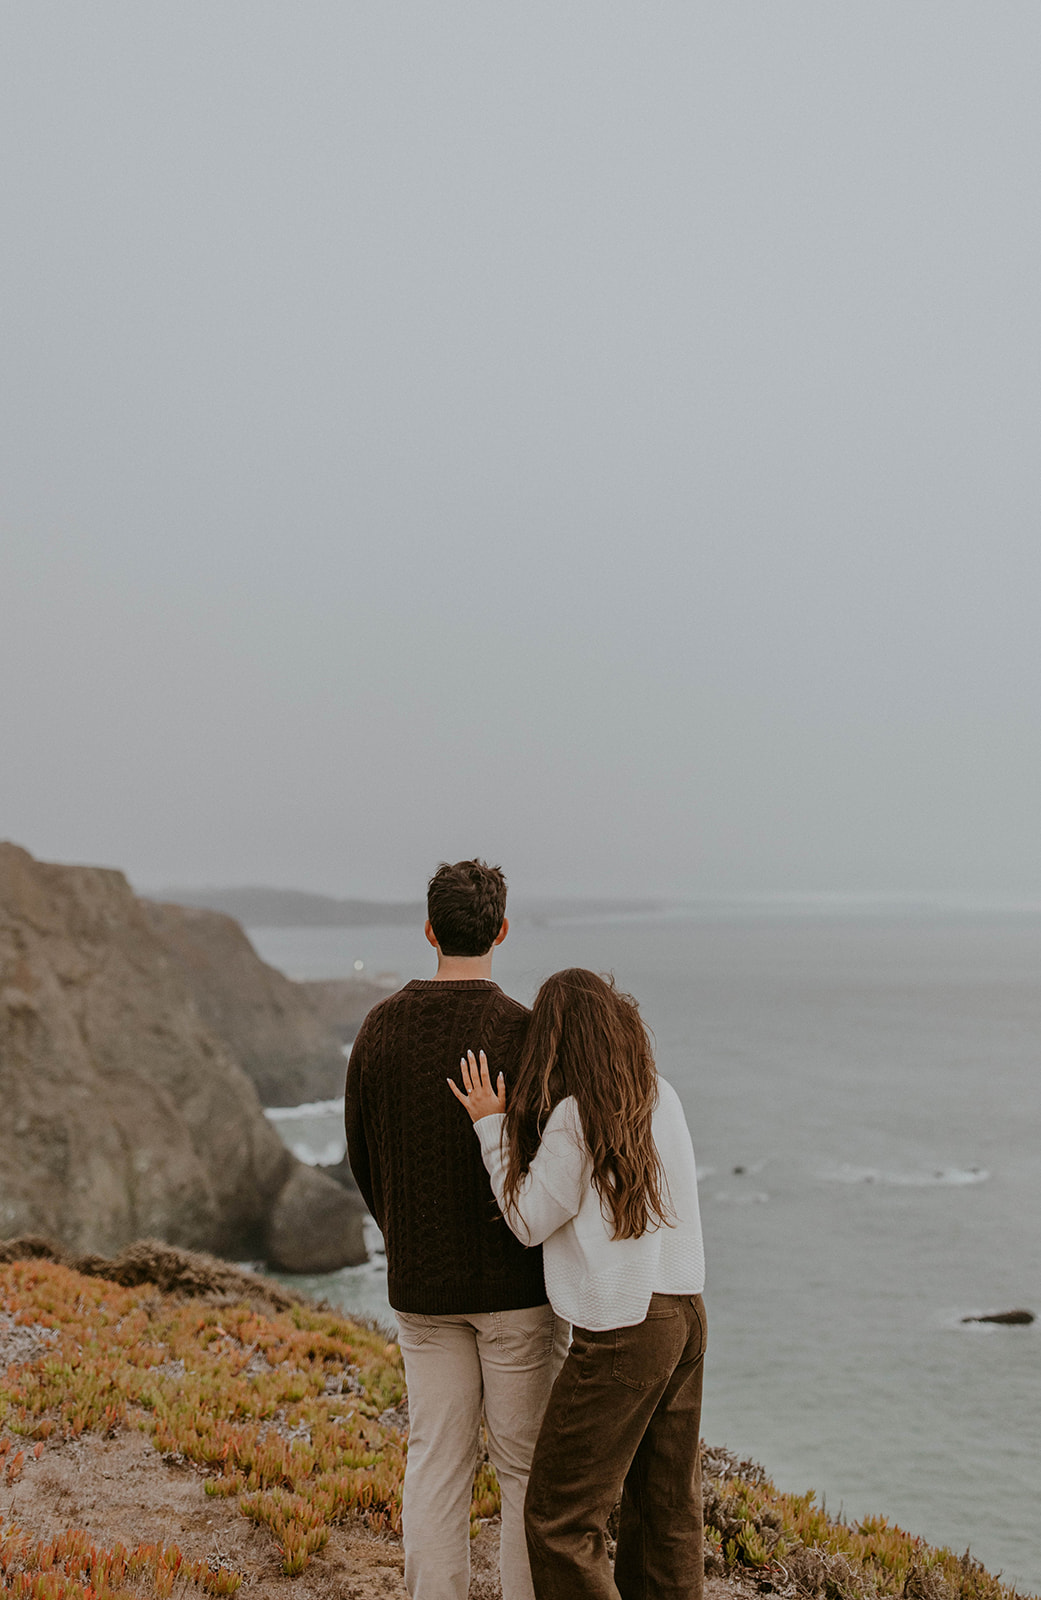 romantic couples photos taken in san francisco california for winter engagement photos. Photo taken by Codi Baer Photography